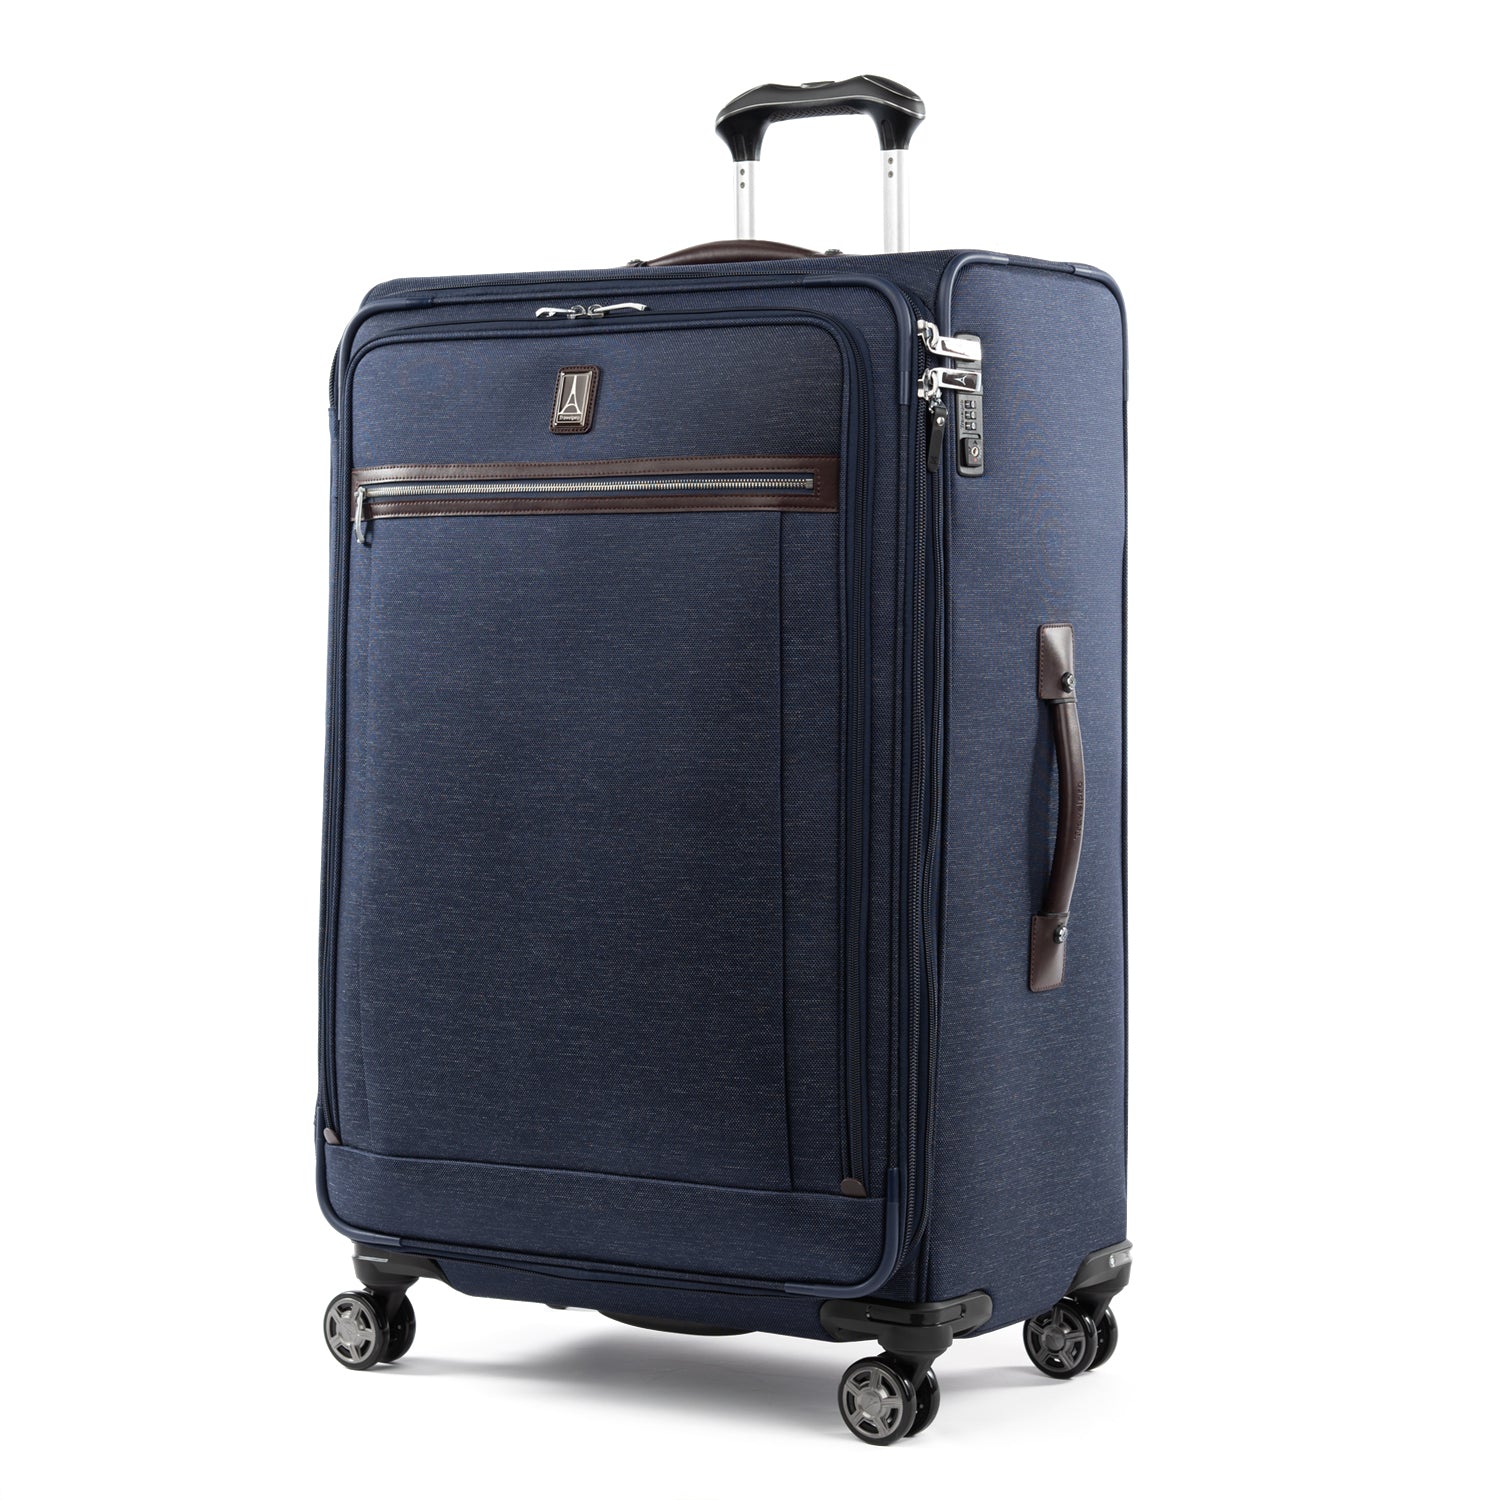 Travelpro Platinum Elite Softside Expandable Luggage, 8 Wheel Spinner Suitcase, USB Port, Suiter, Men and Women U5